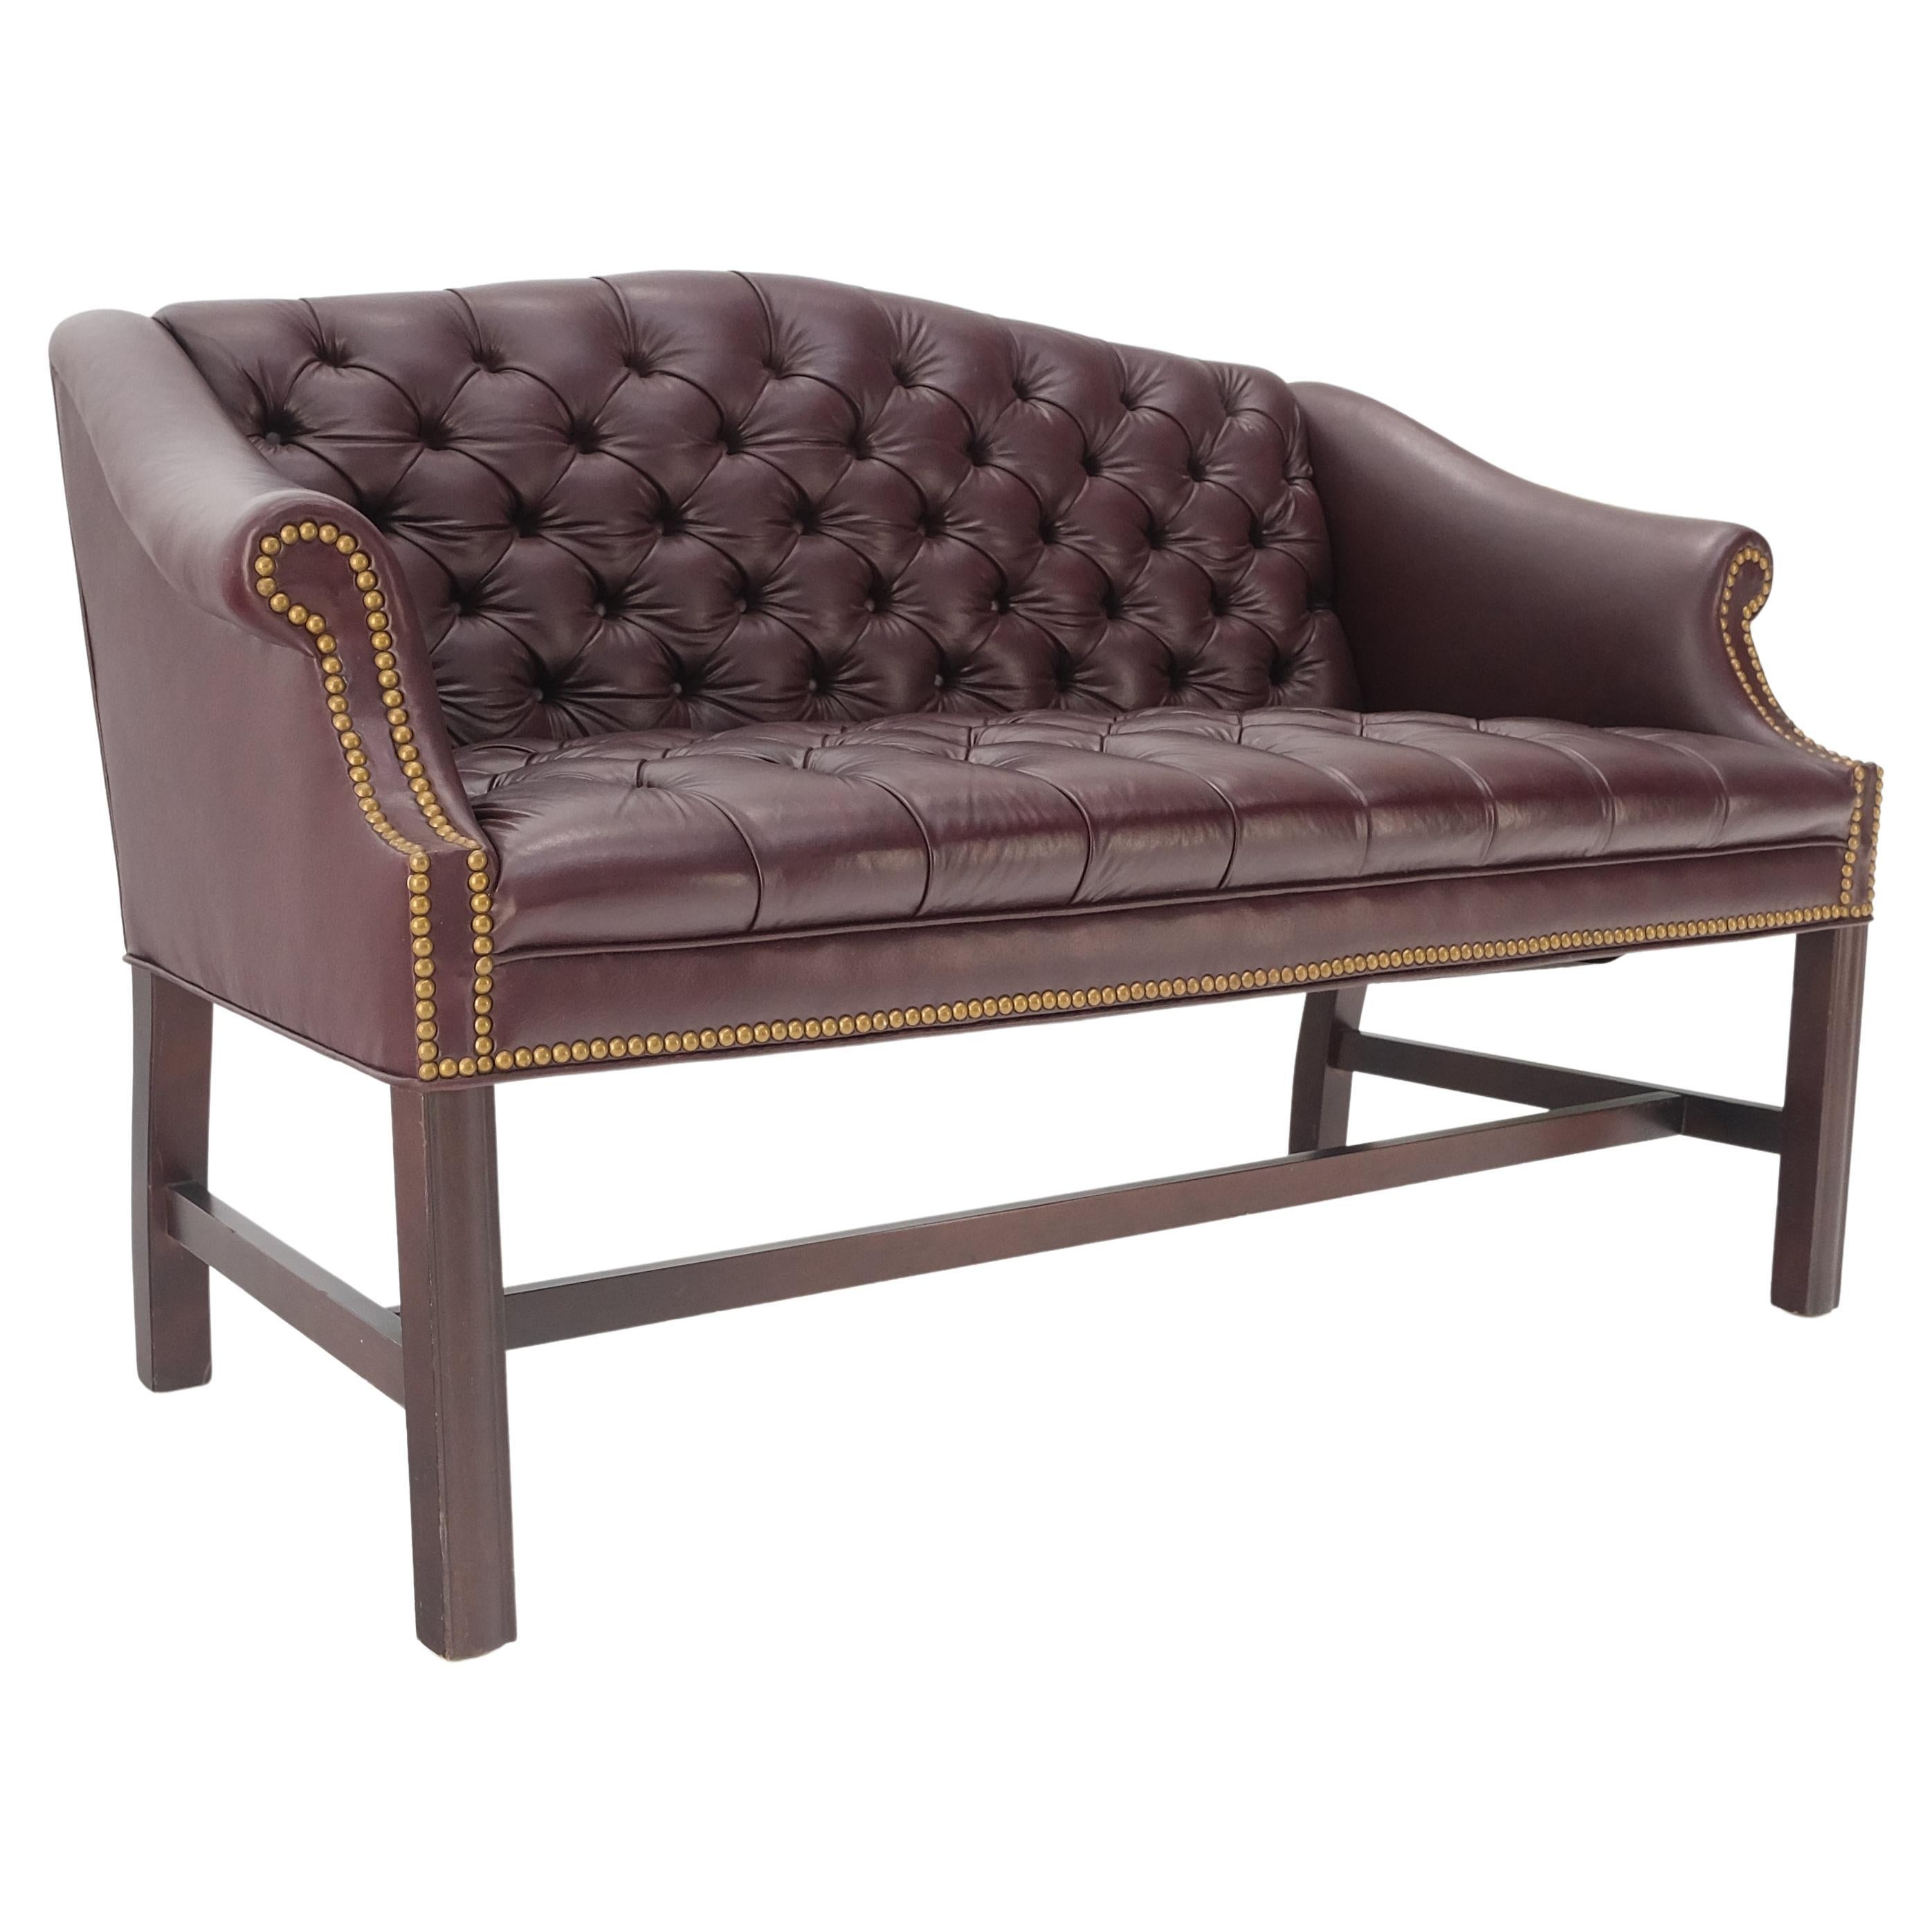 Getuftete Burgunder Leder Federal Style Settee Love Seat Couch Sofa MINT!